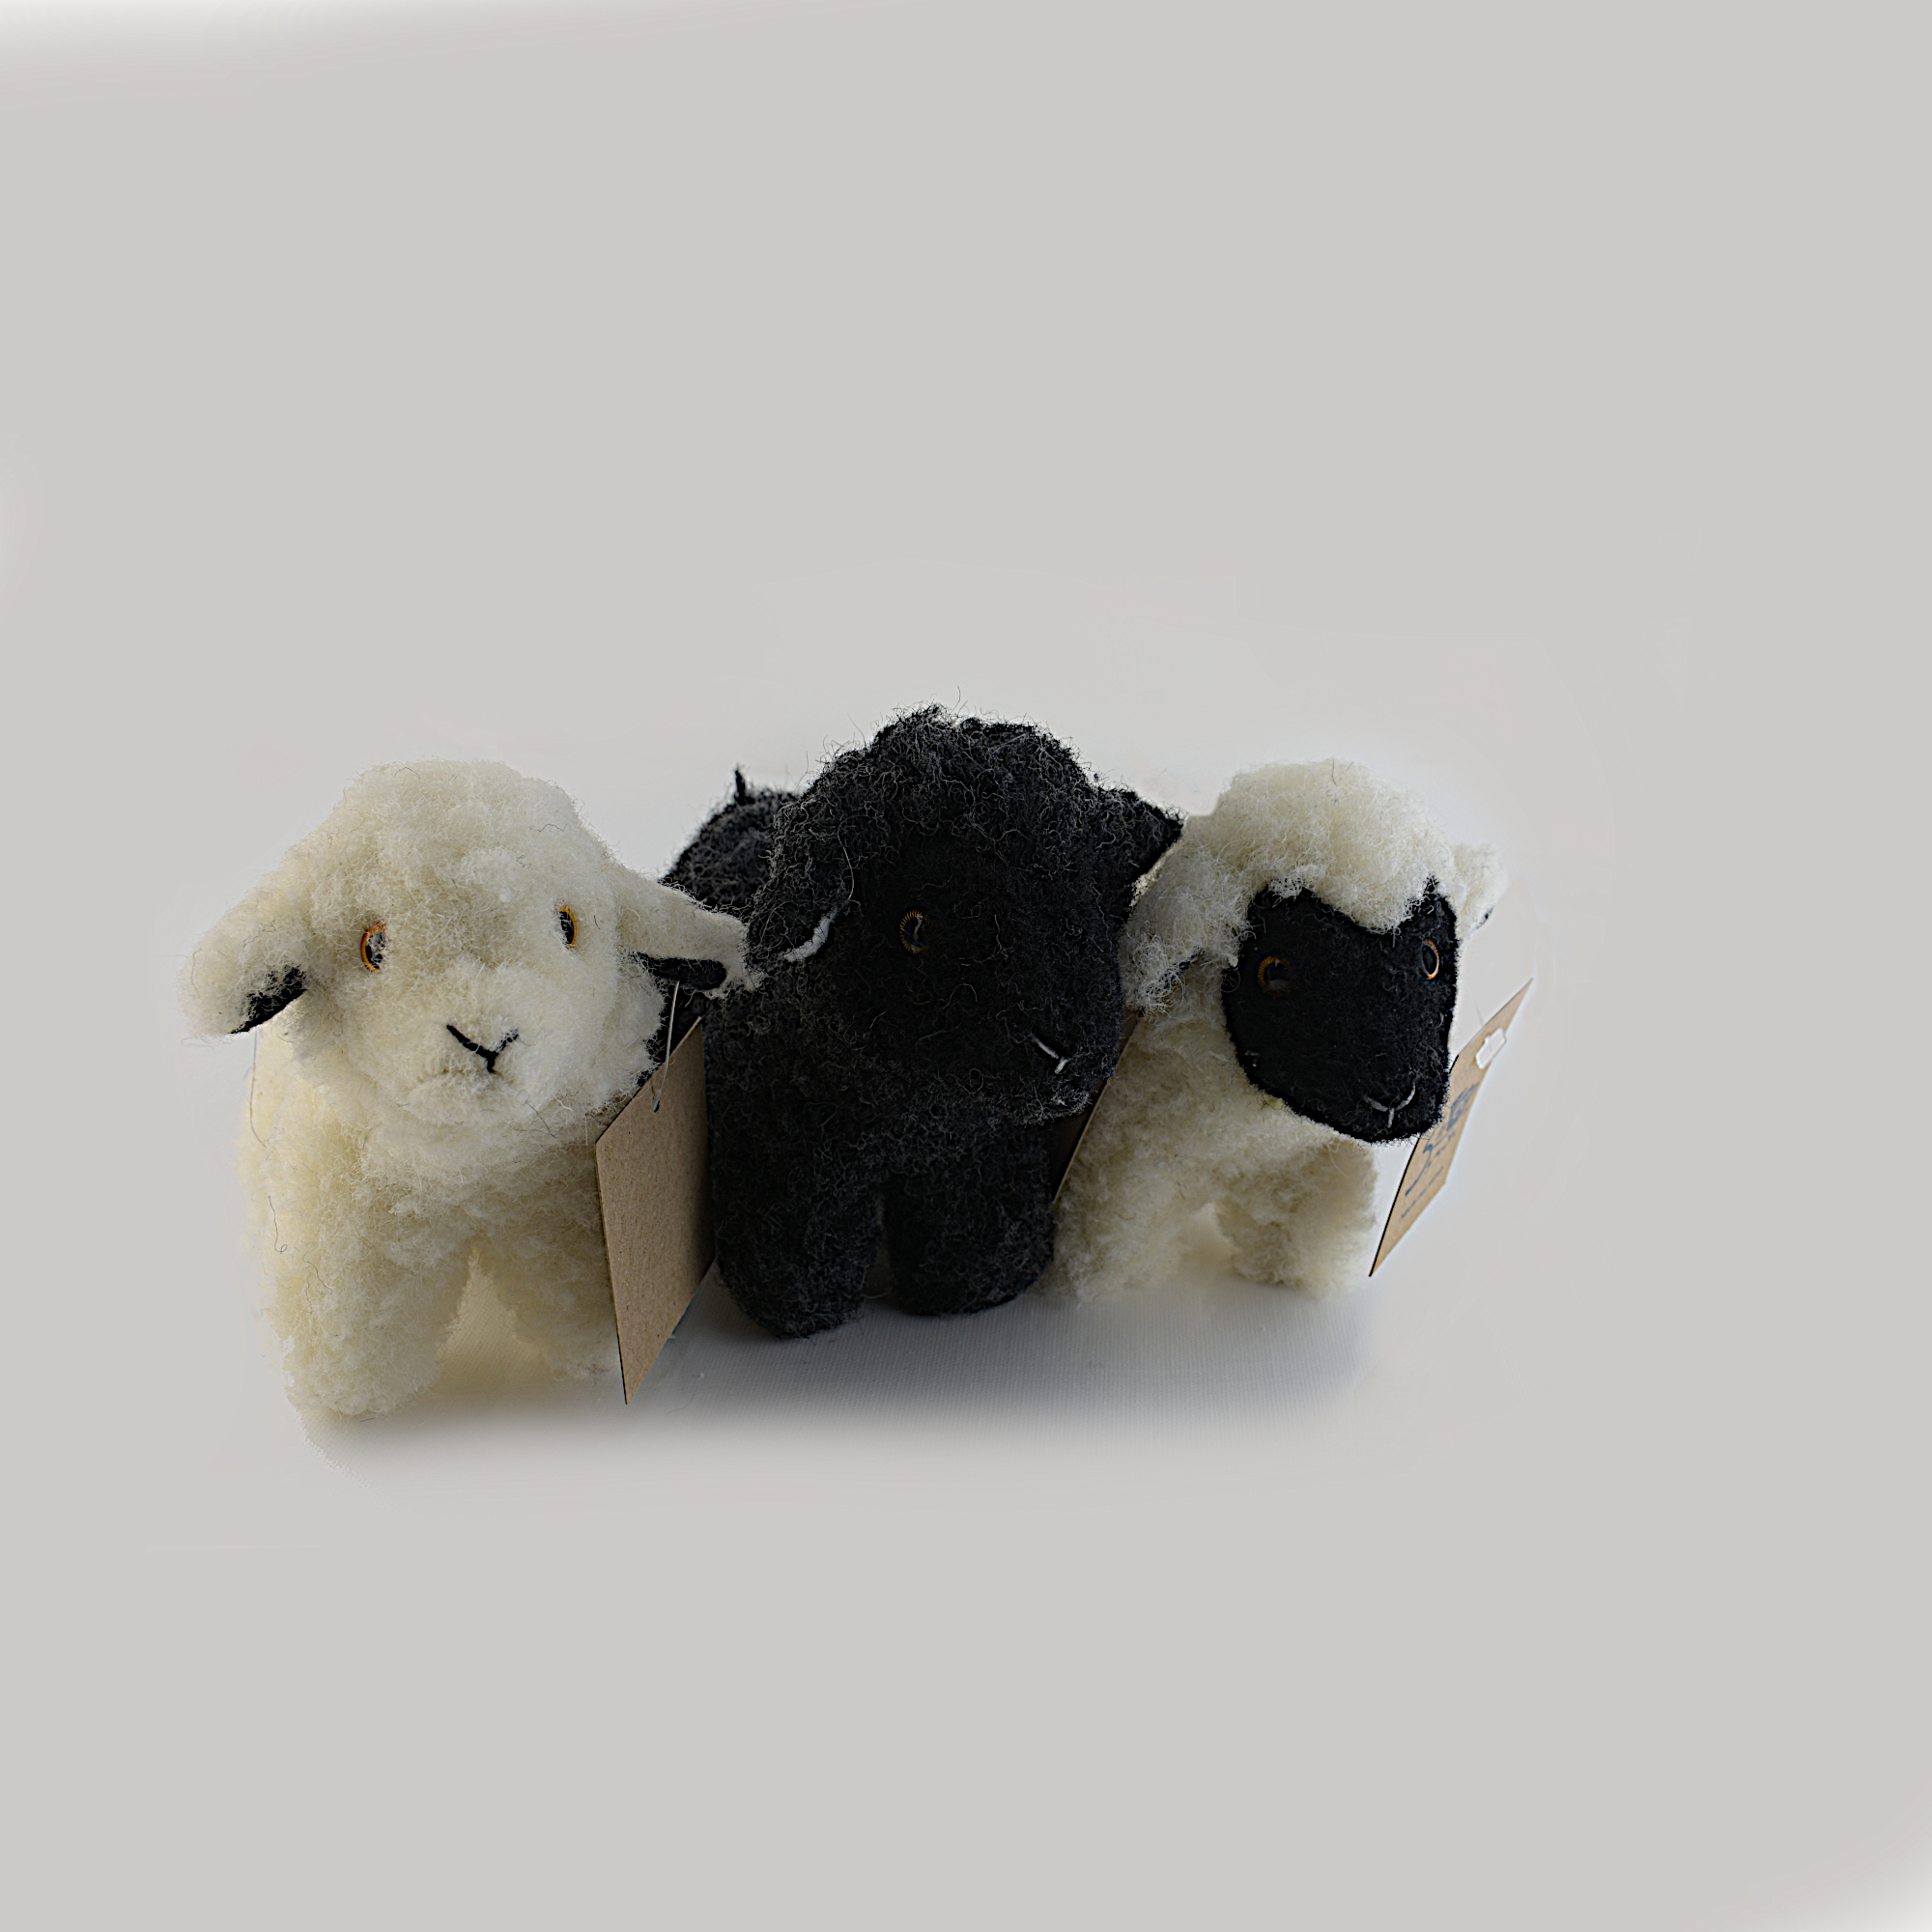 White and Black Wool Sheep 